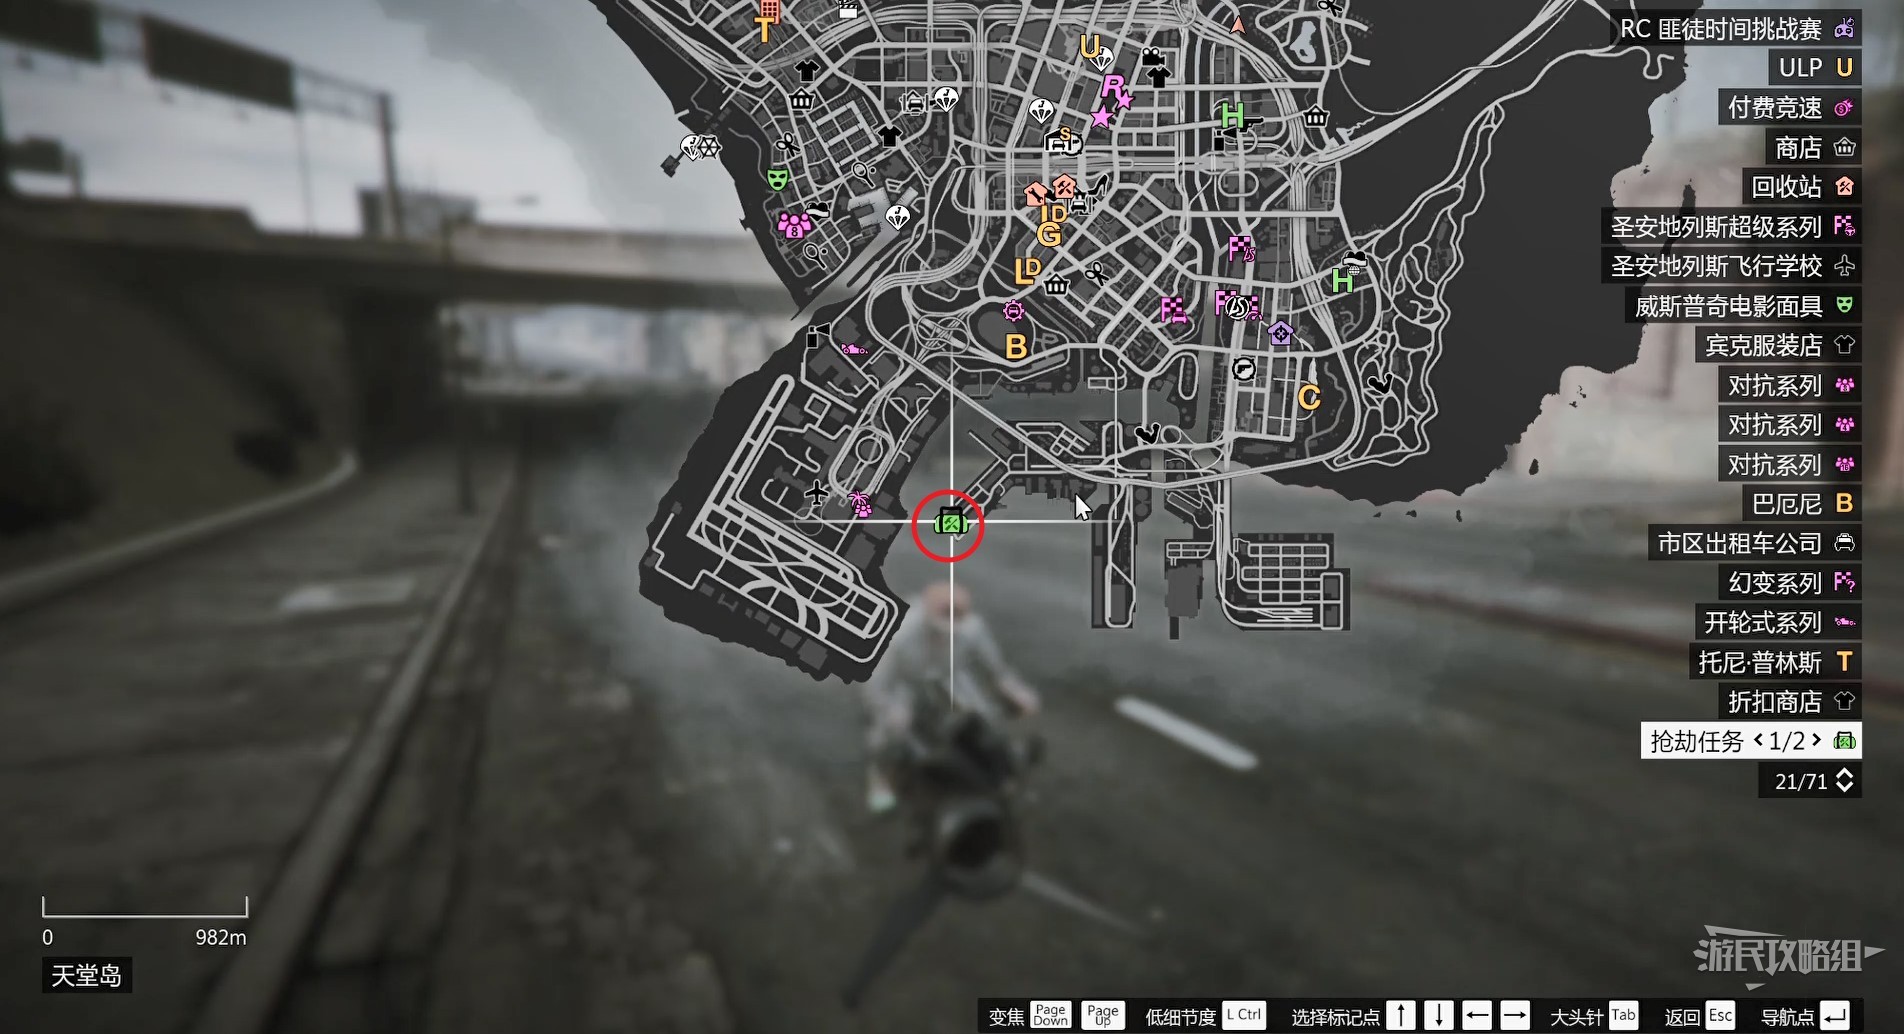 《GTAOL》回收站DLC抢劫任务图文流程攻略_杜根抢劫-前置任务 - 第1张